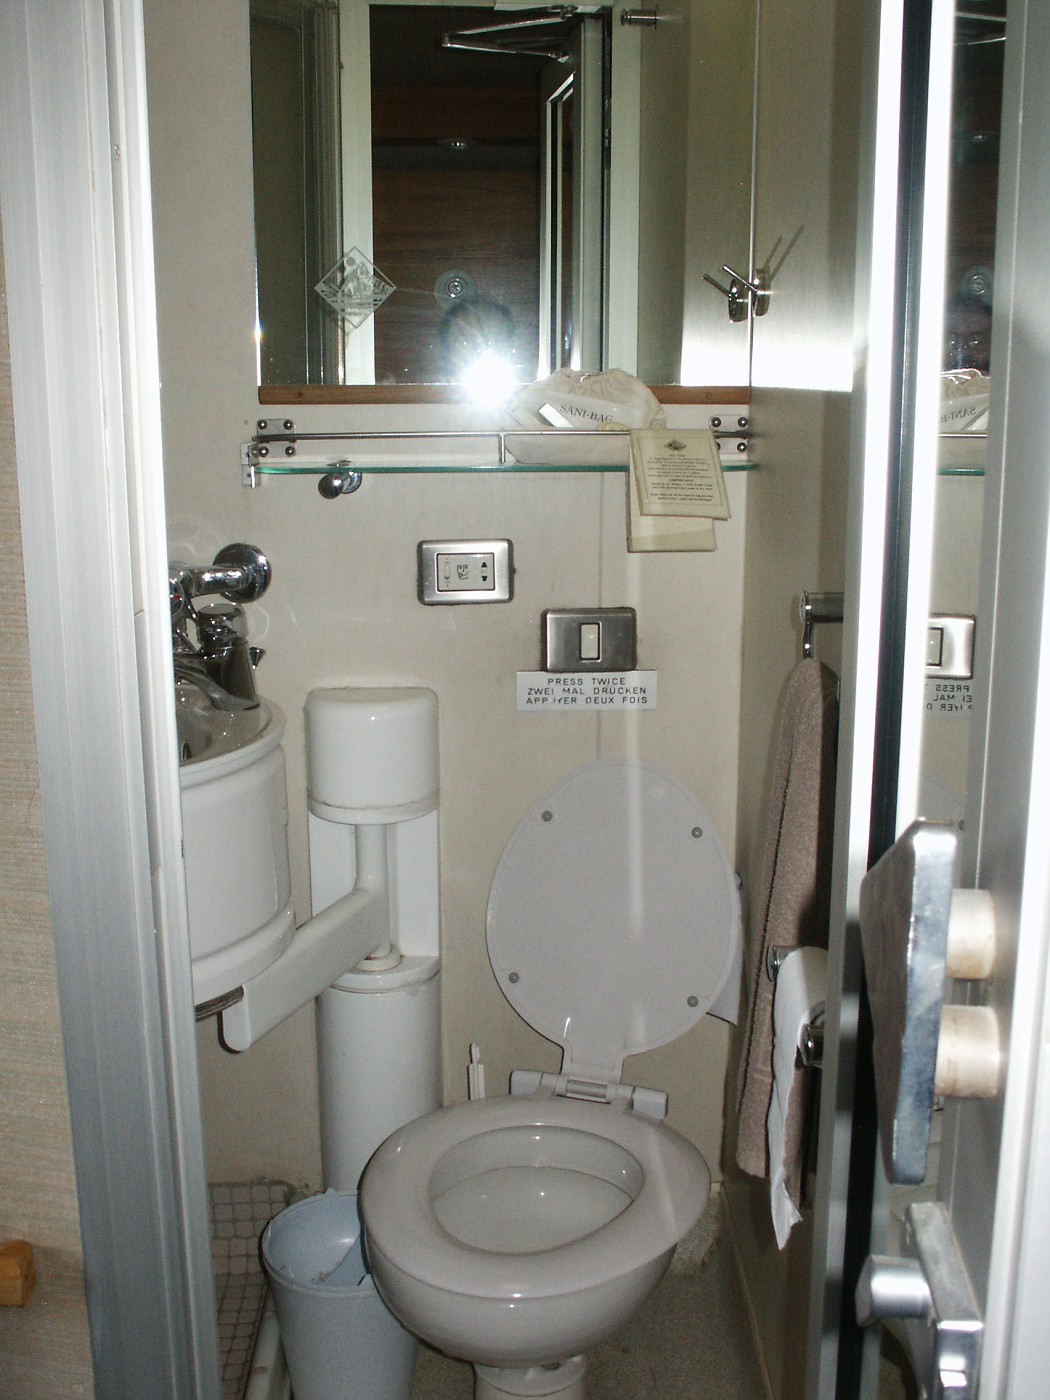 Photo Desert Express Toilet Sink Shower Electric Plugs